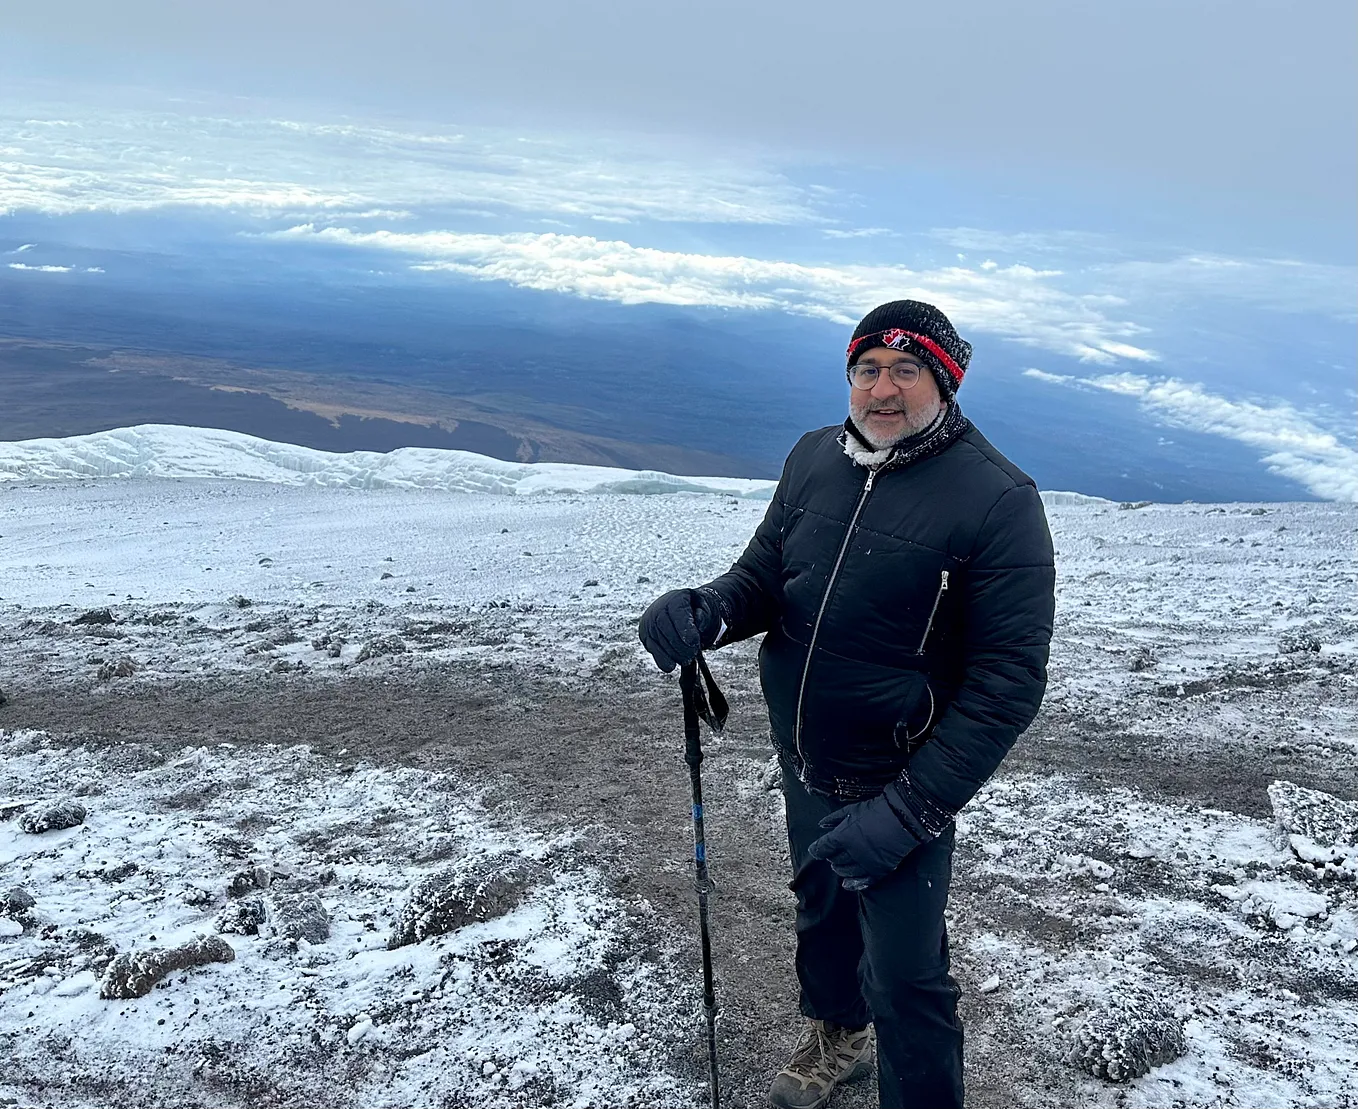 Conquering Kilimanjaro as an amateur :